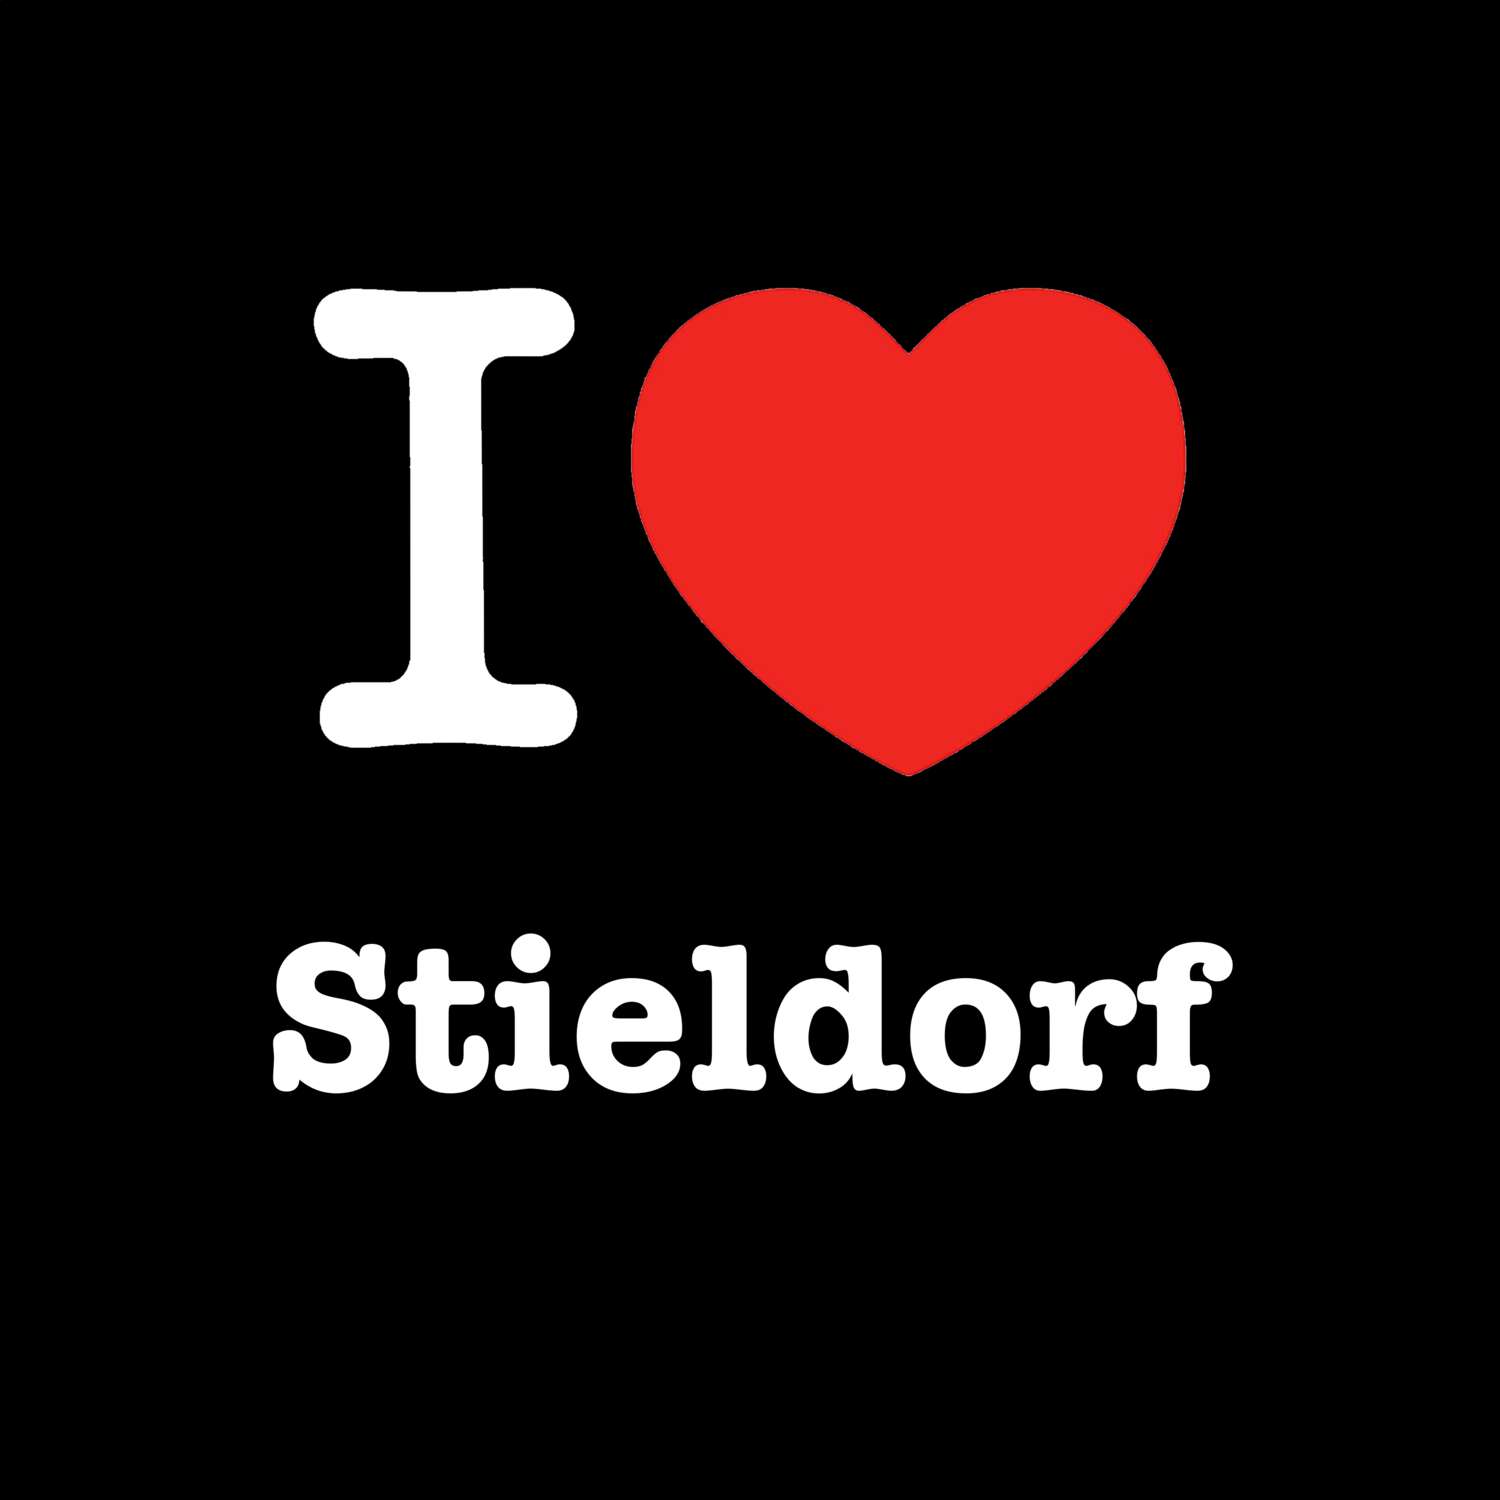 Stieldorf T-Shirt »I love«